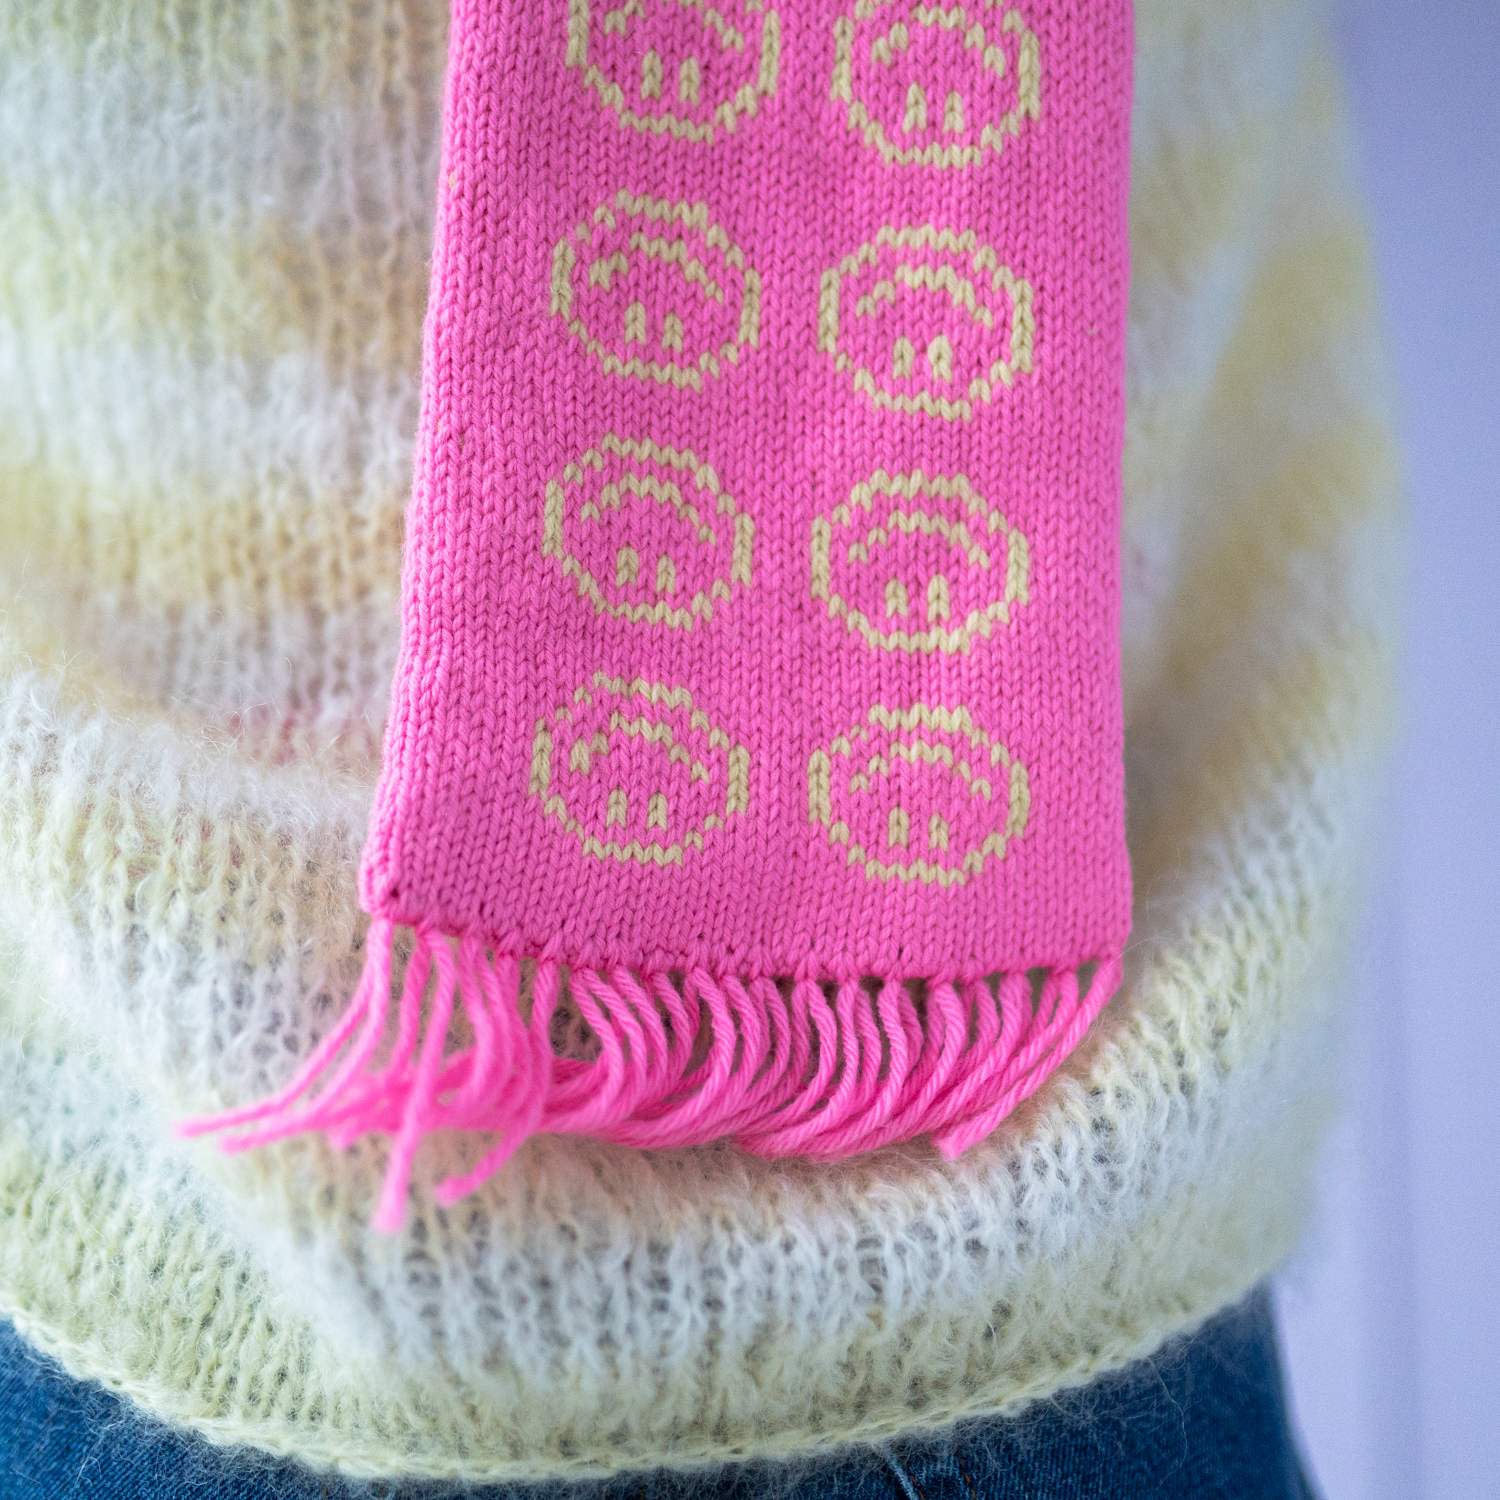  - Put a smile on scarf | Pattern smiley scarf | Knitting kit - by HipKnitShop - 16/02/2022